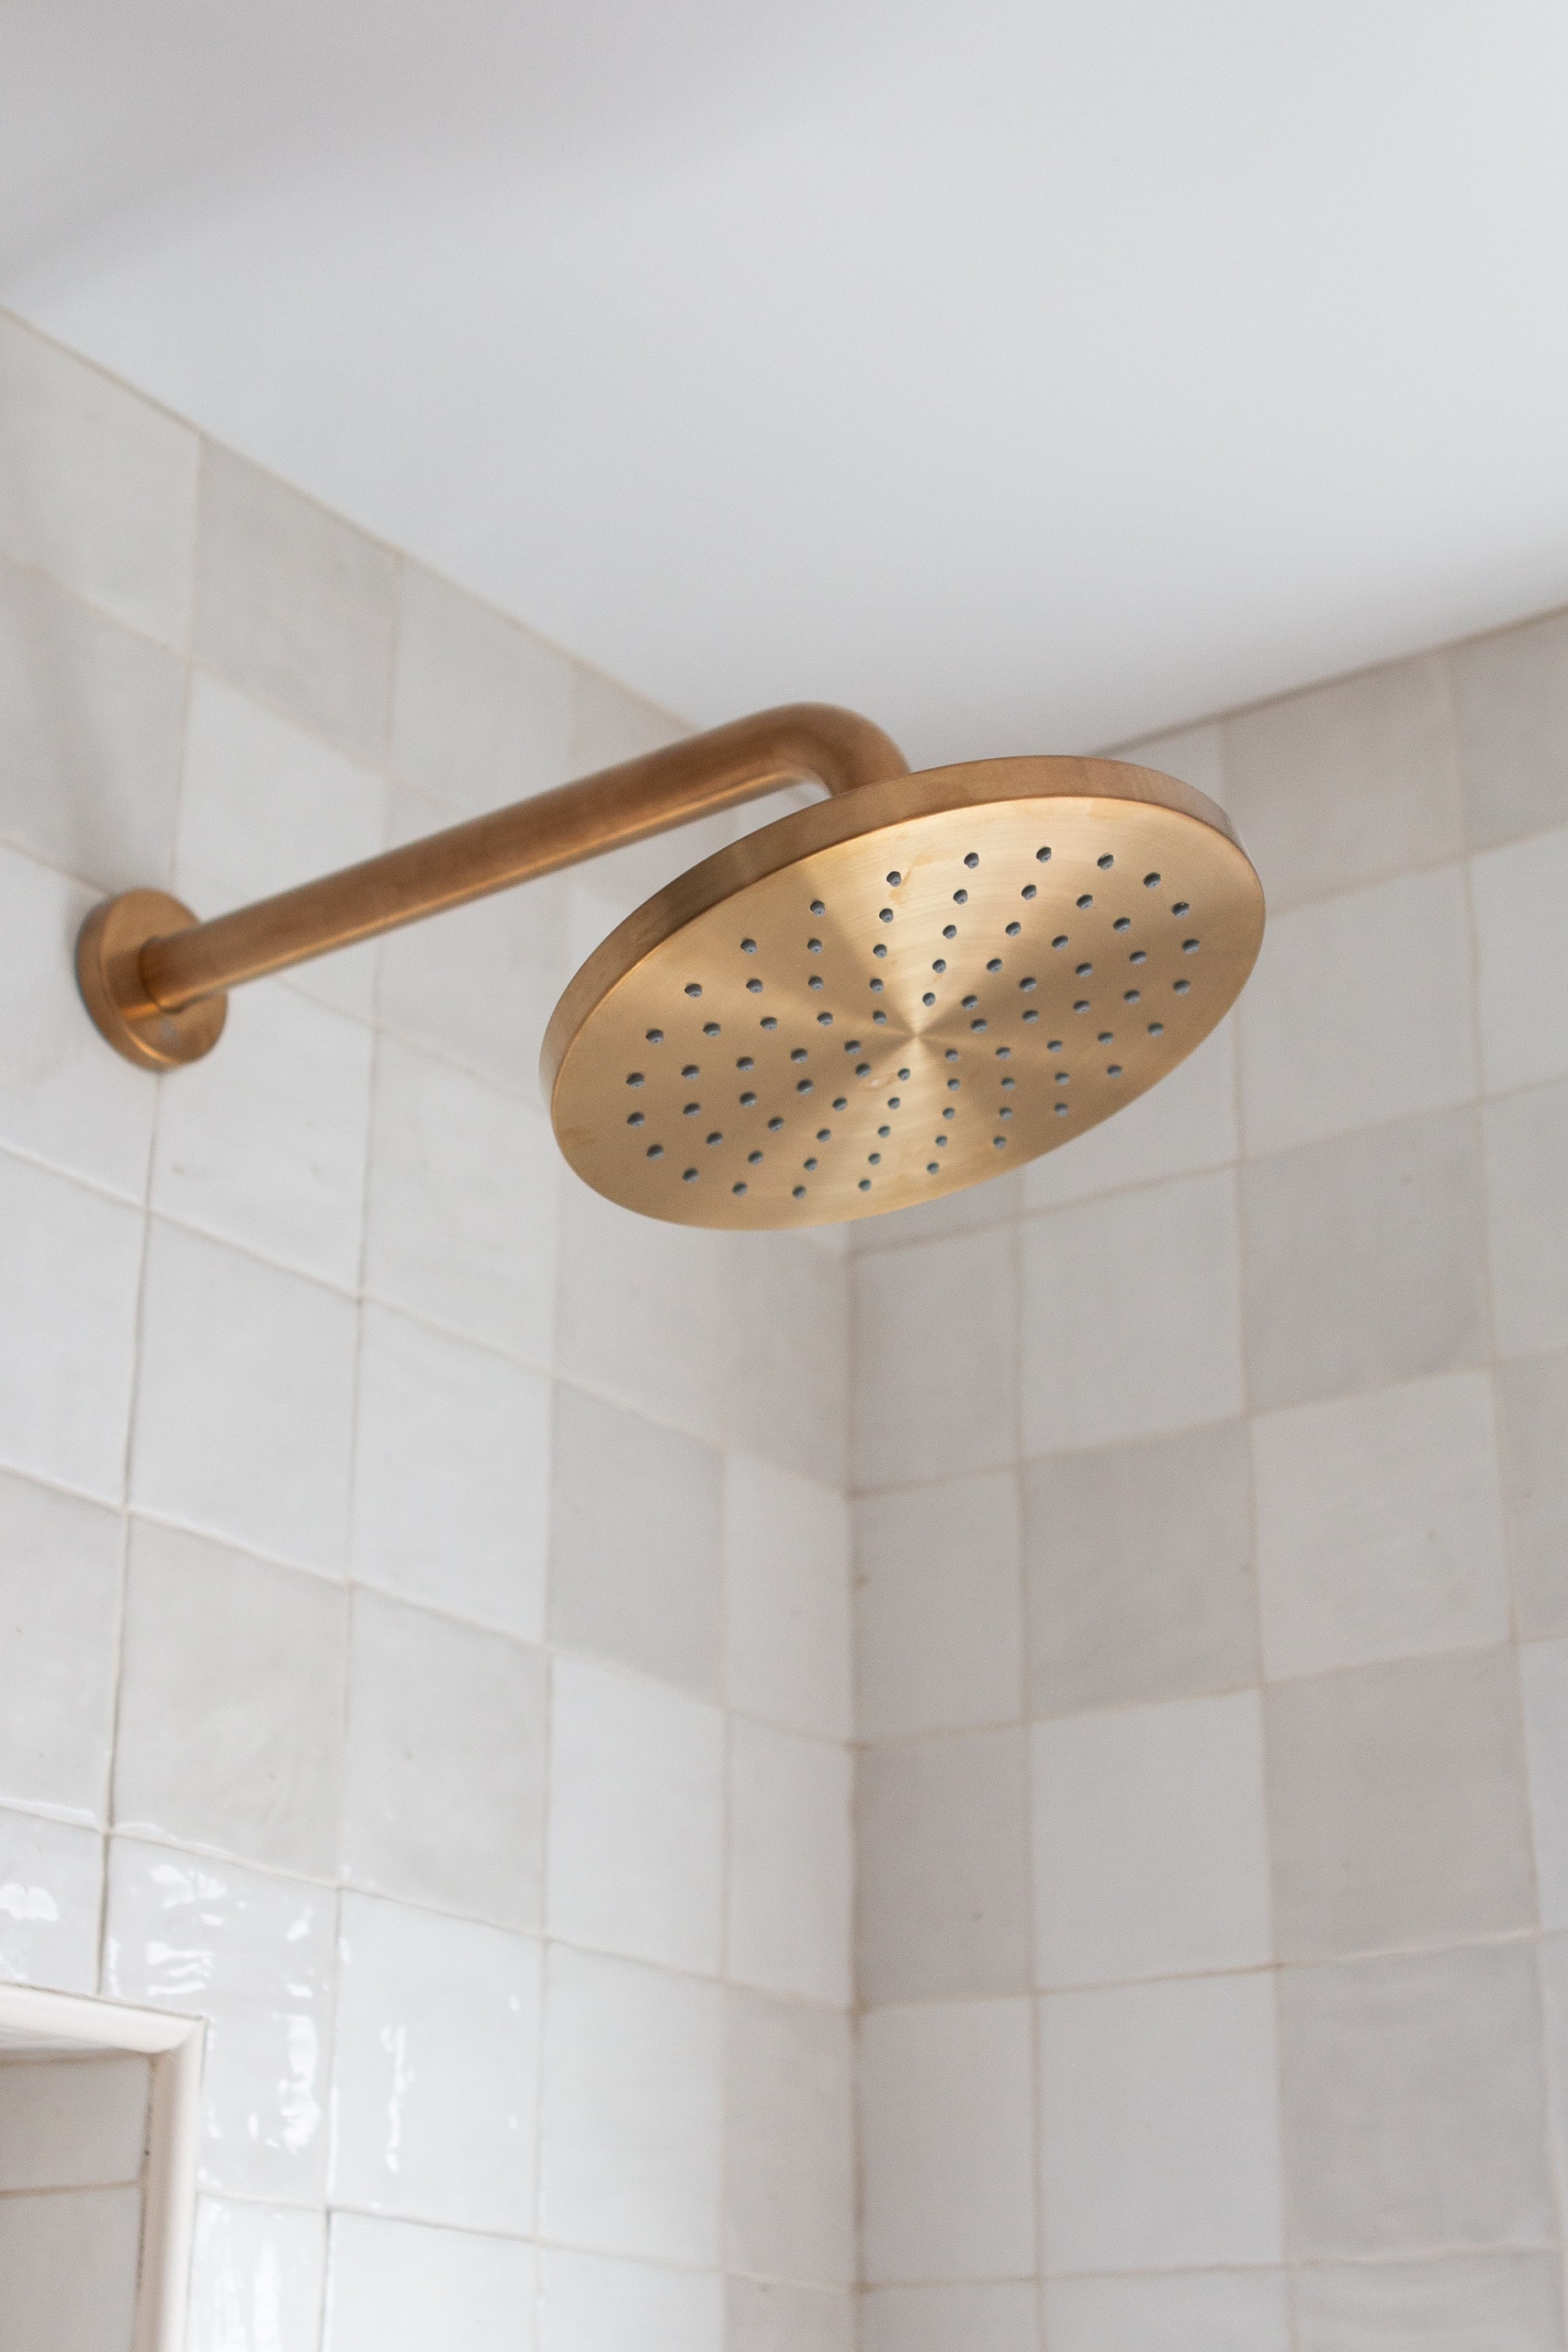 gold showerhead in a bathroom